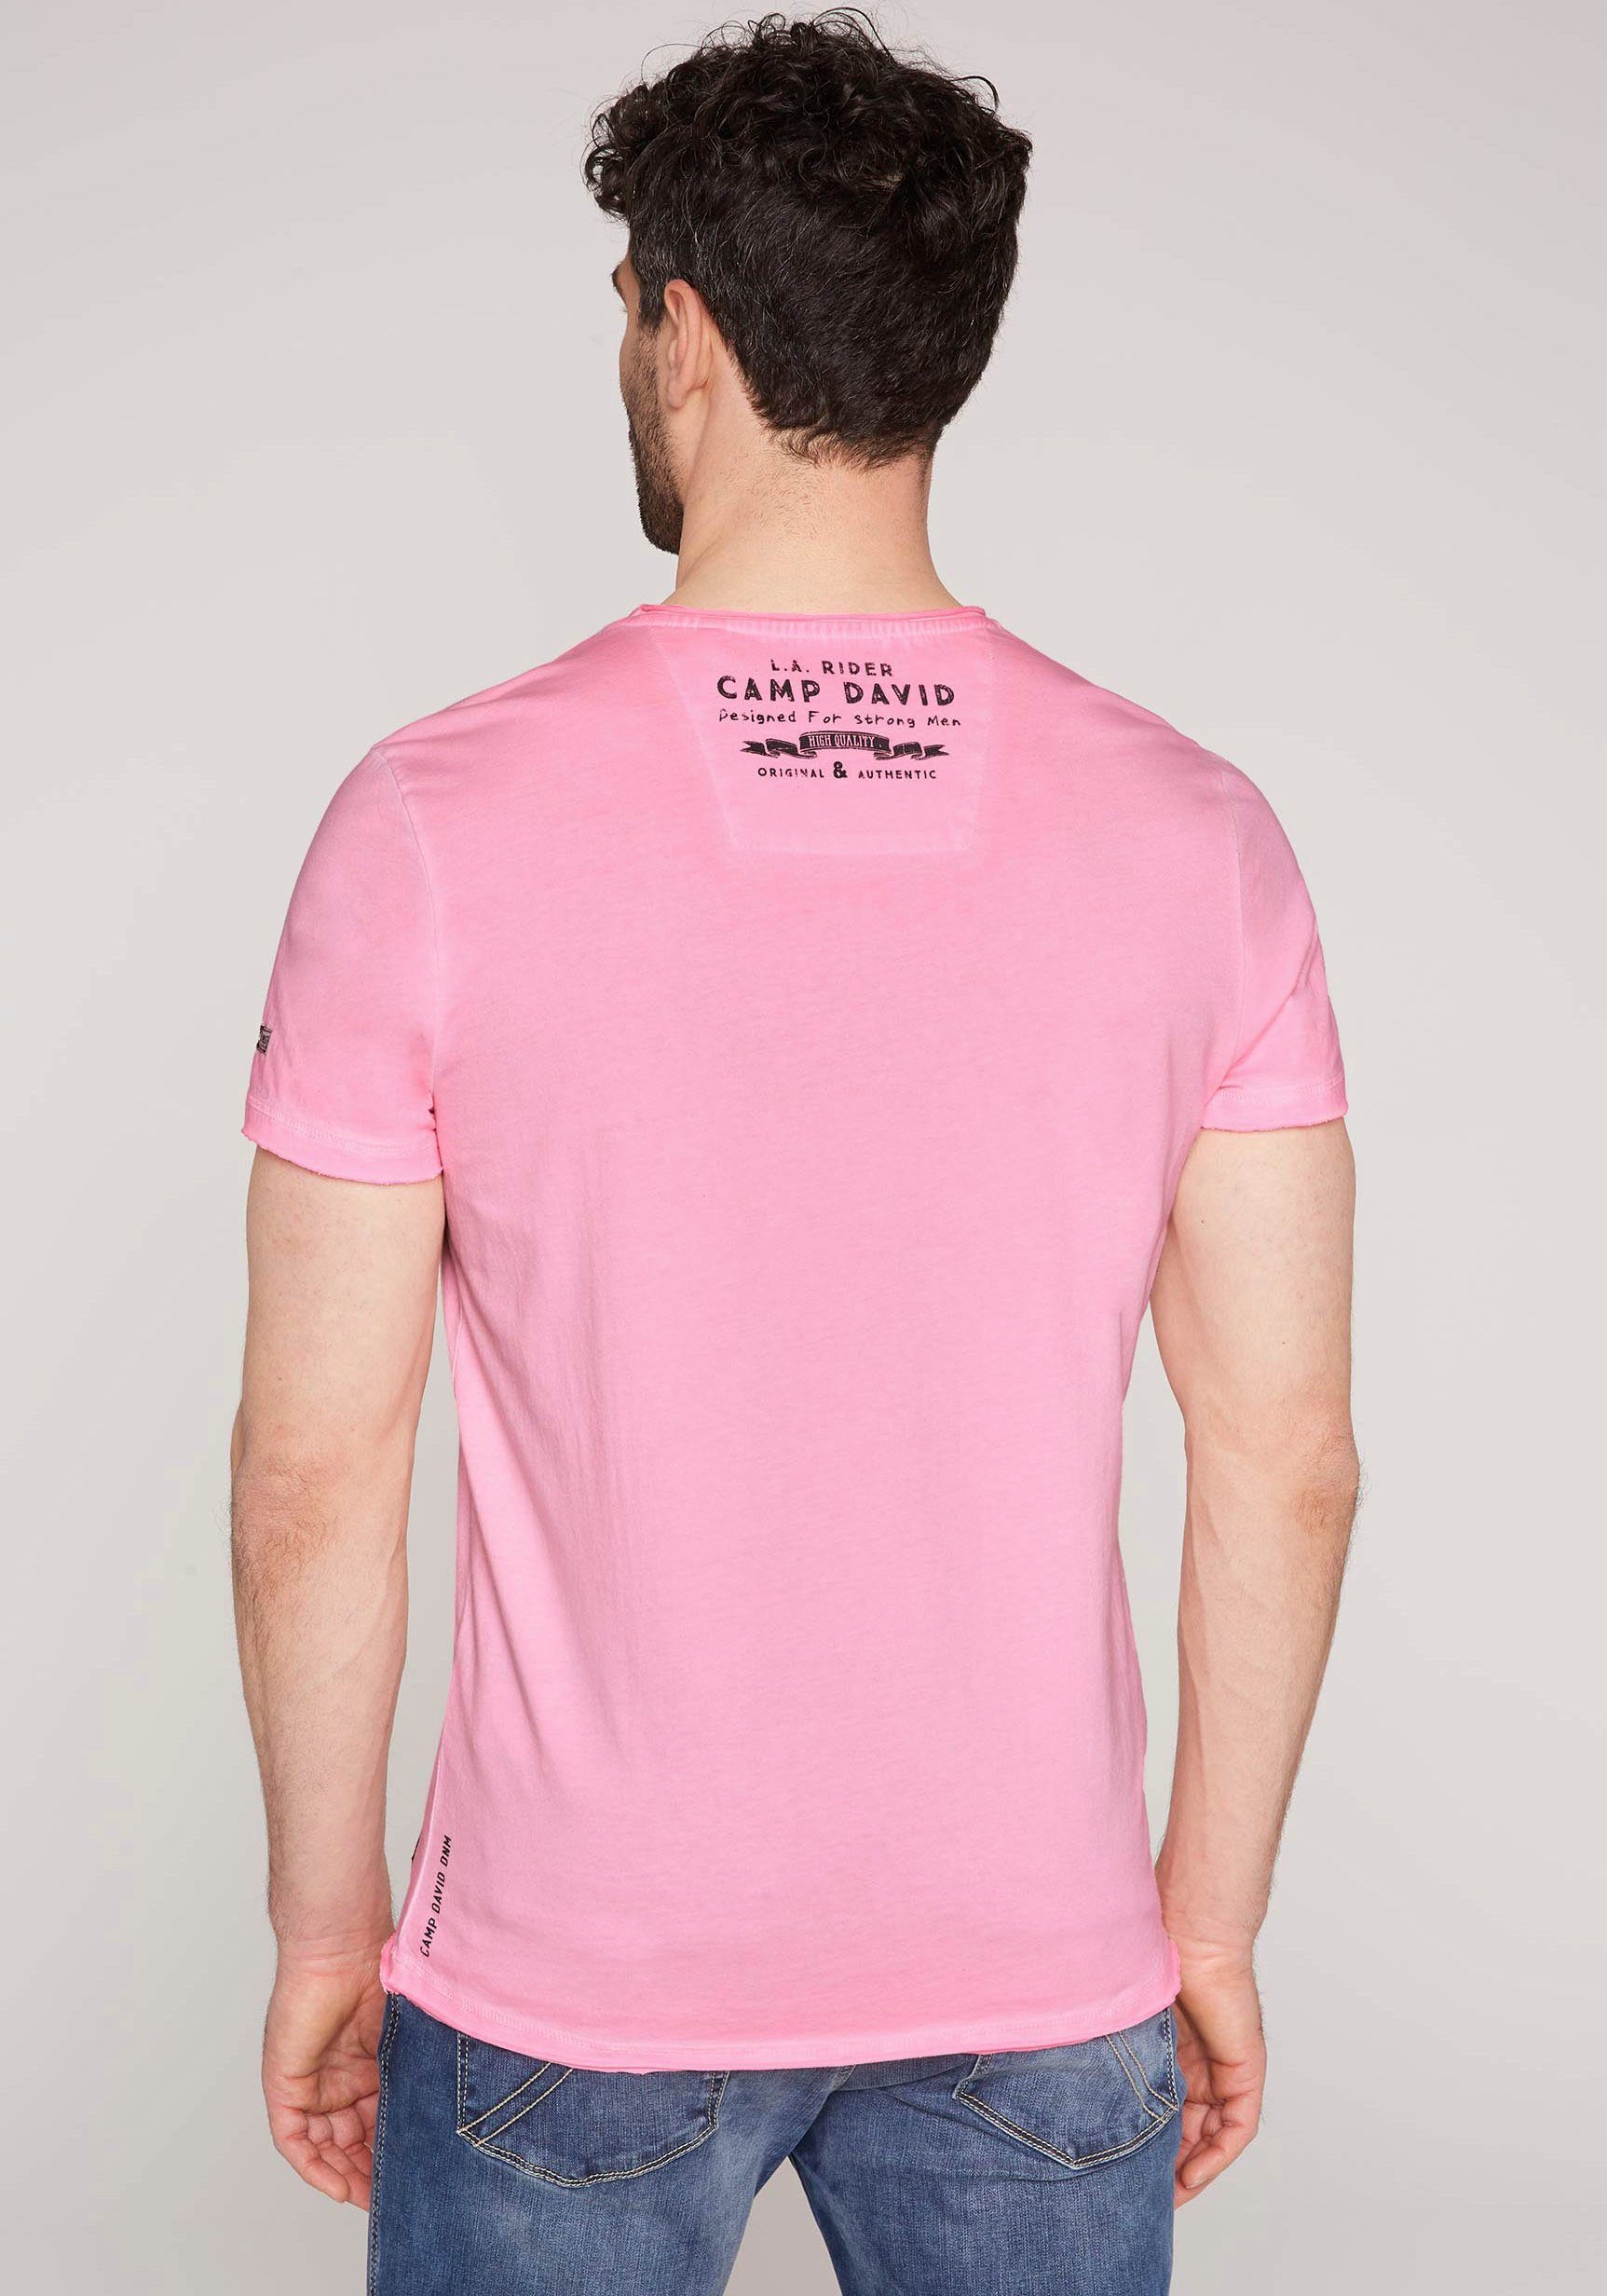 T-Shirt DAVID neon pink CAMP